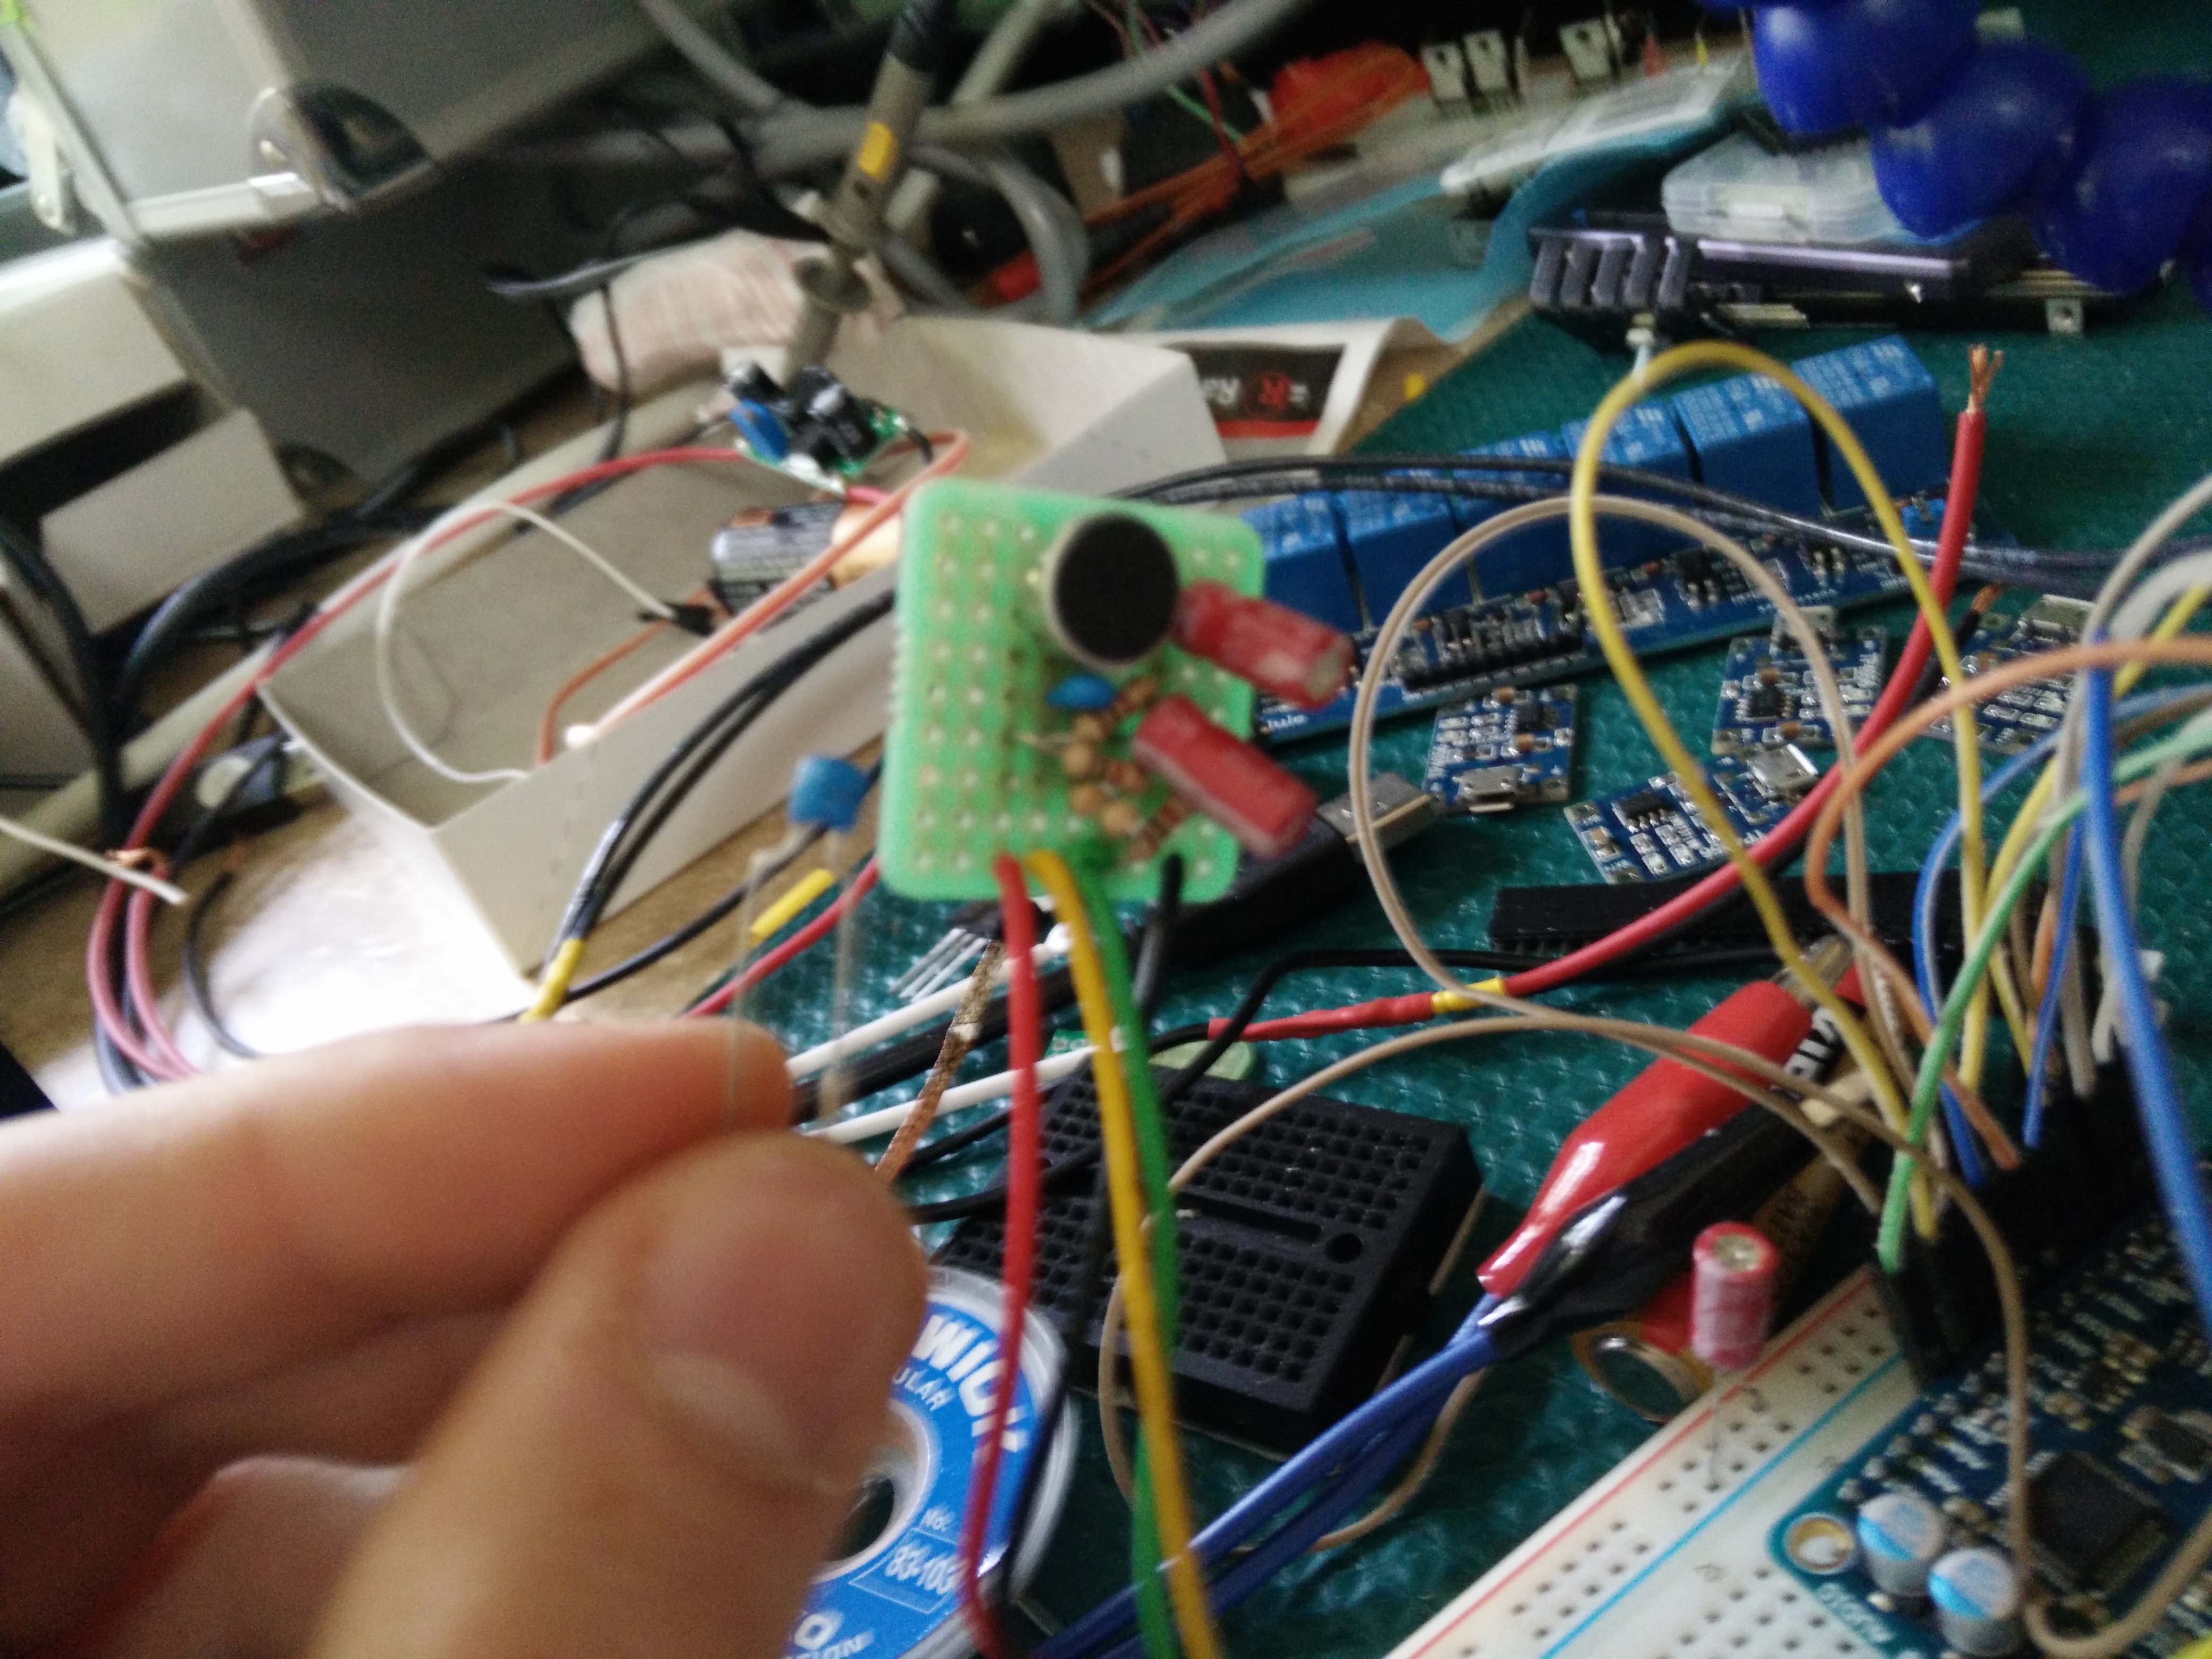 A microphone circuit board.